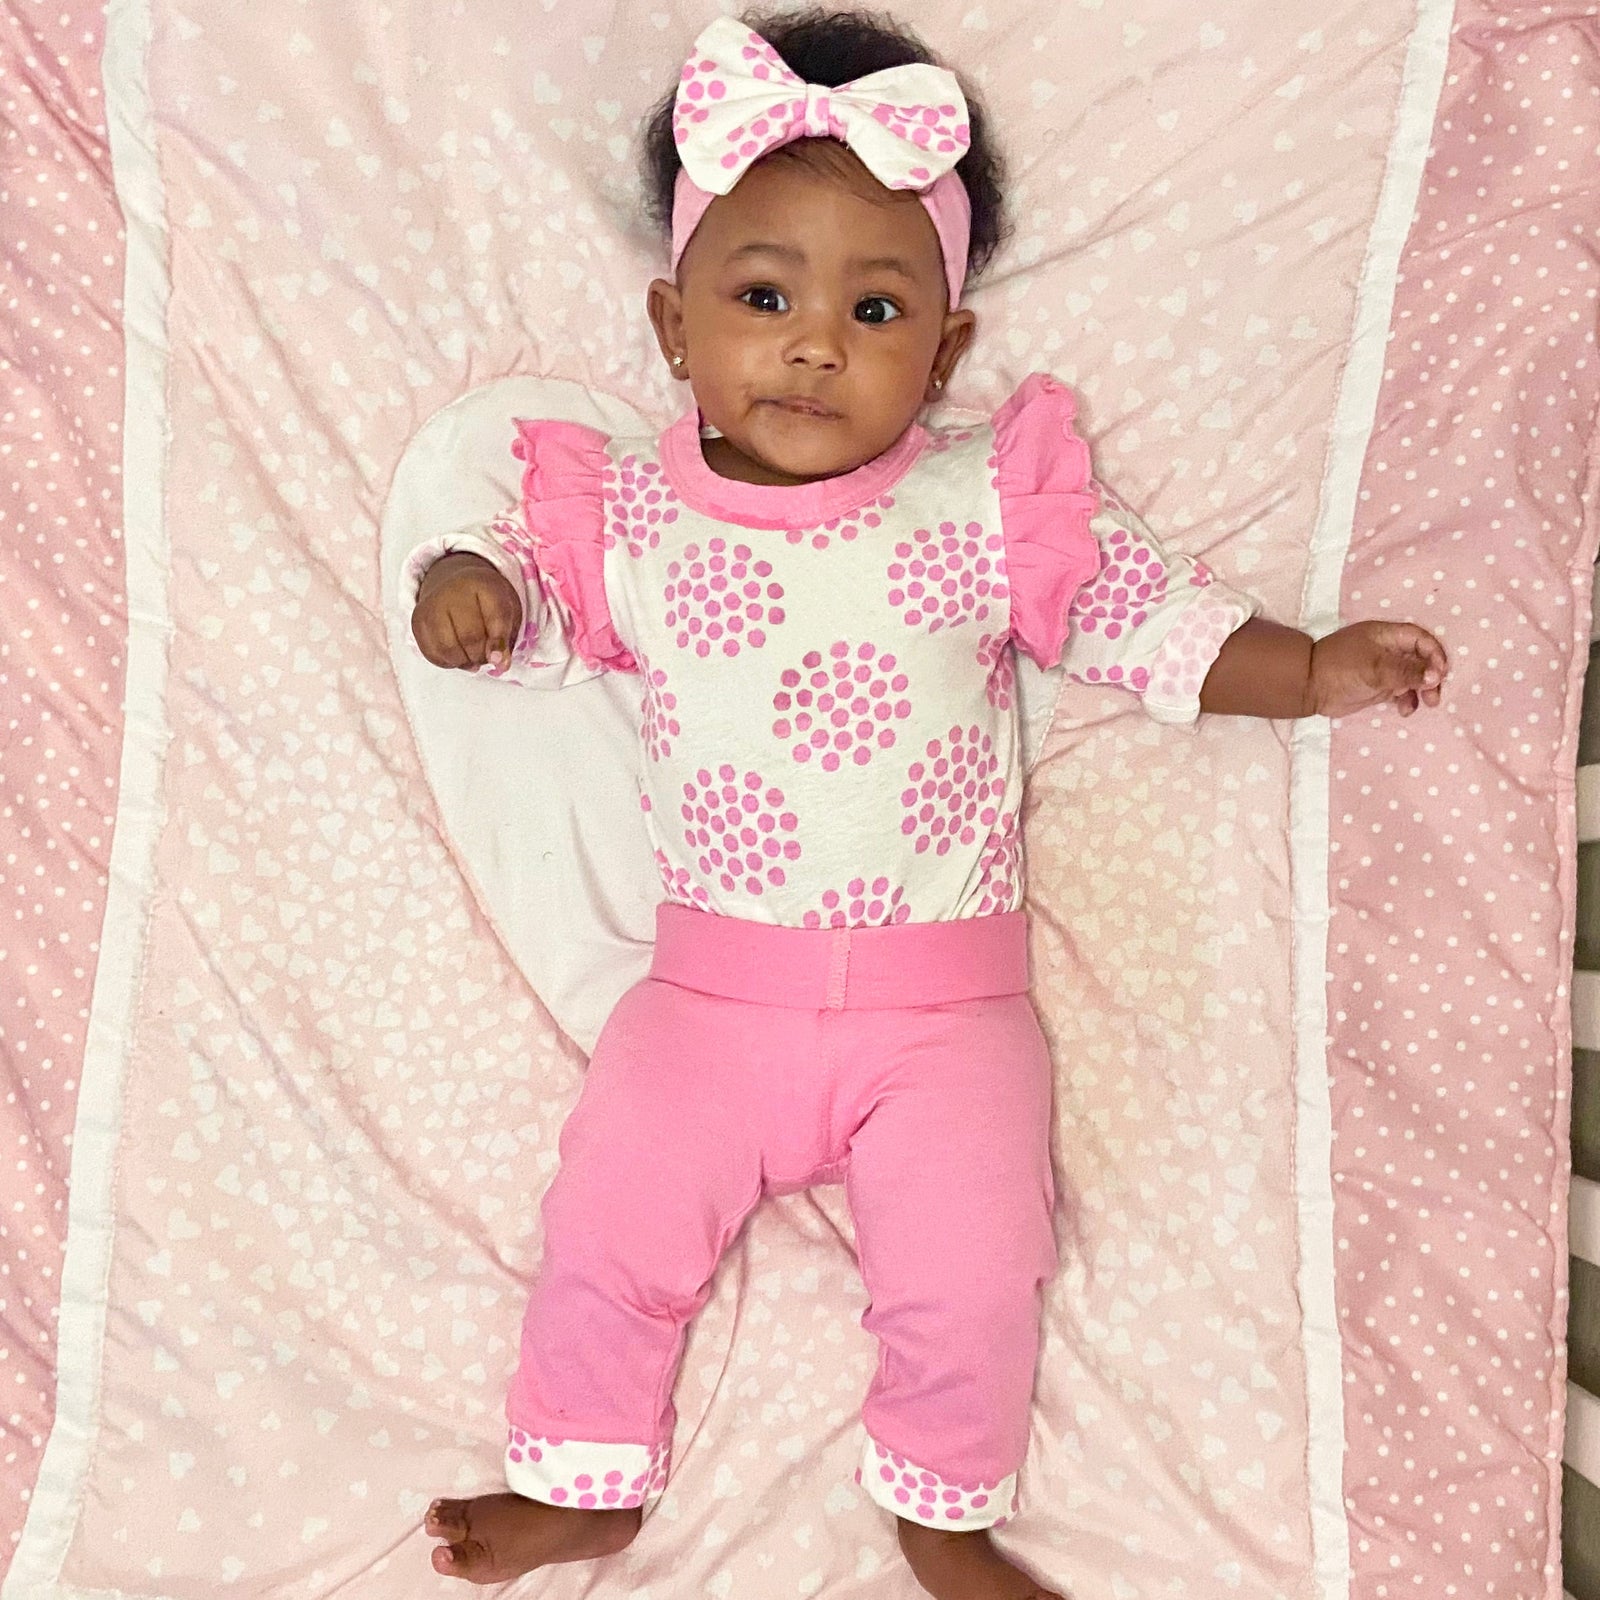 AnnLoren Baby Girls Layette Pink Polka Dot Onesie Pants Headband 3pc Gift Set Clothing Sizes 3M - 18M